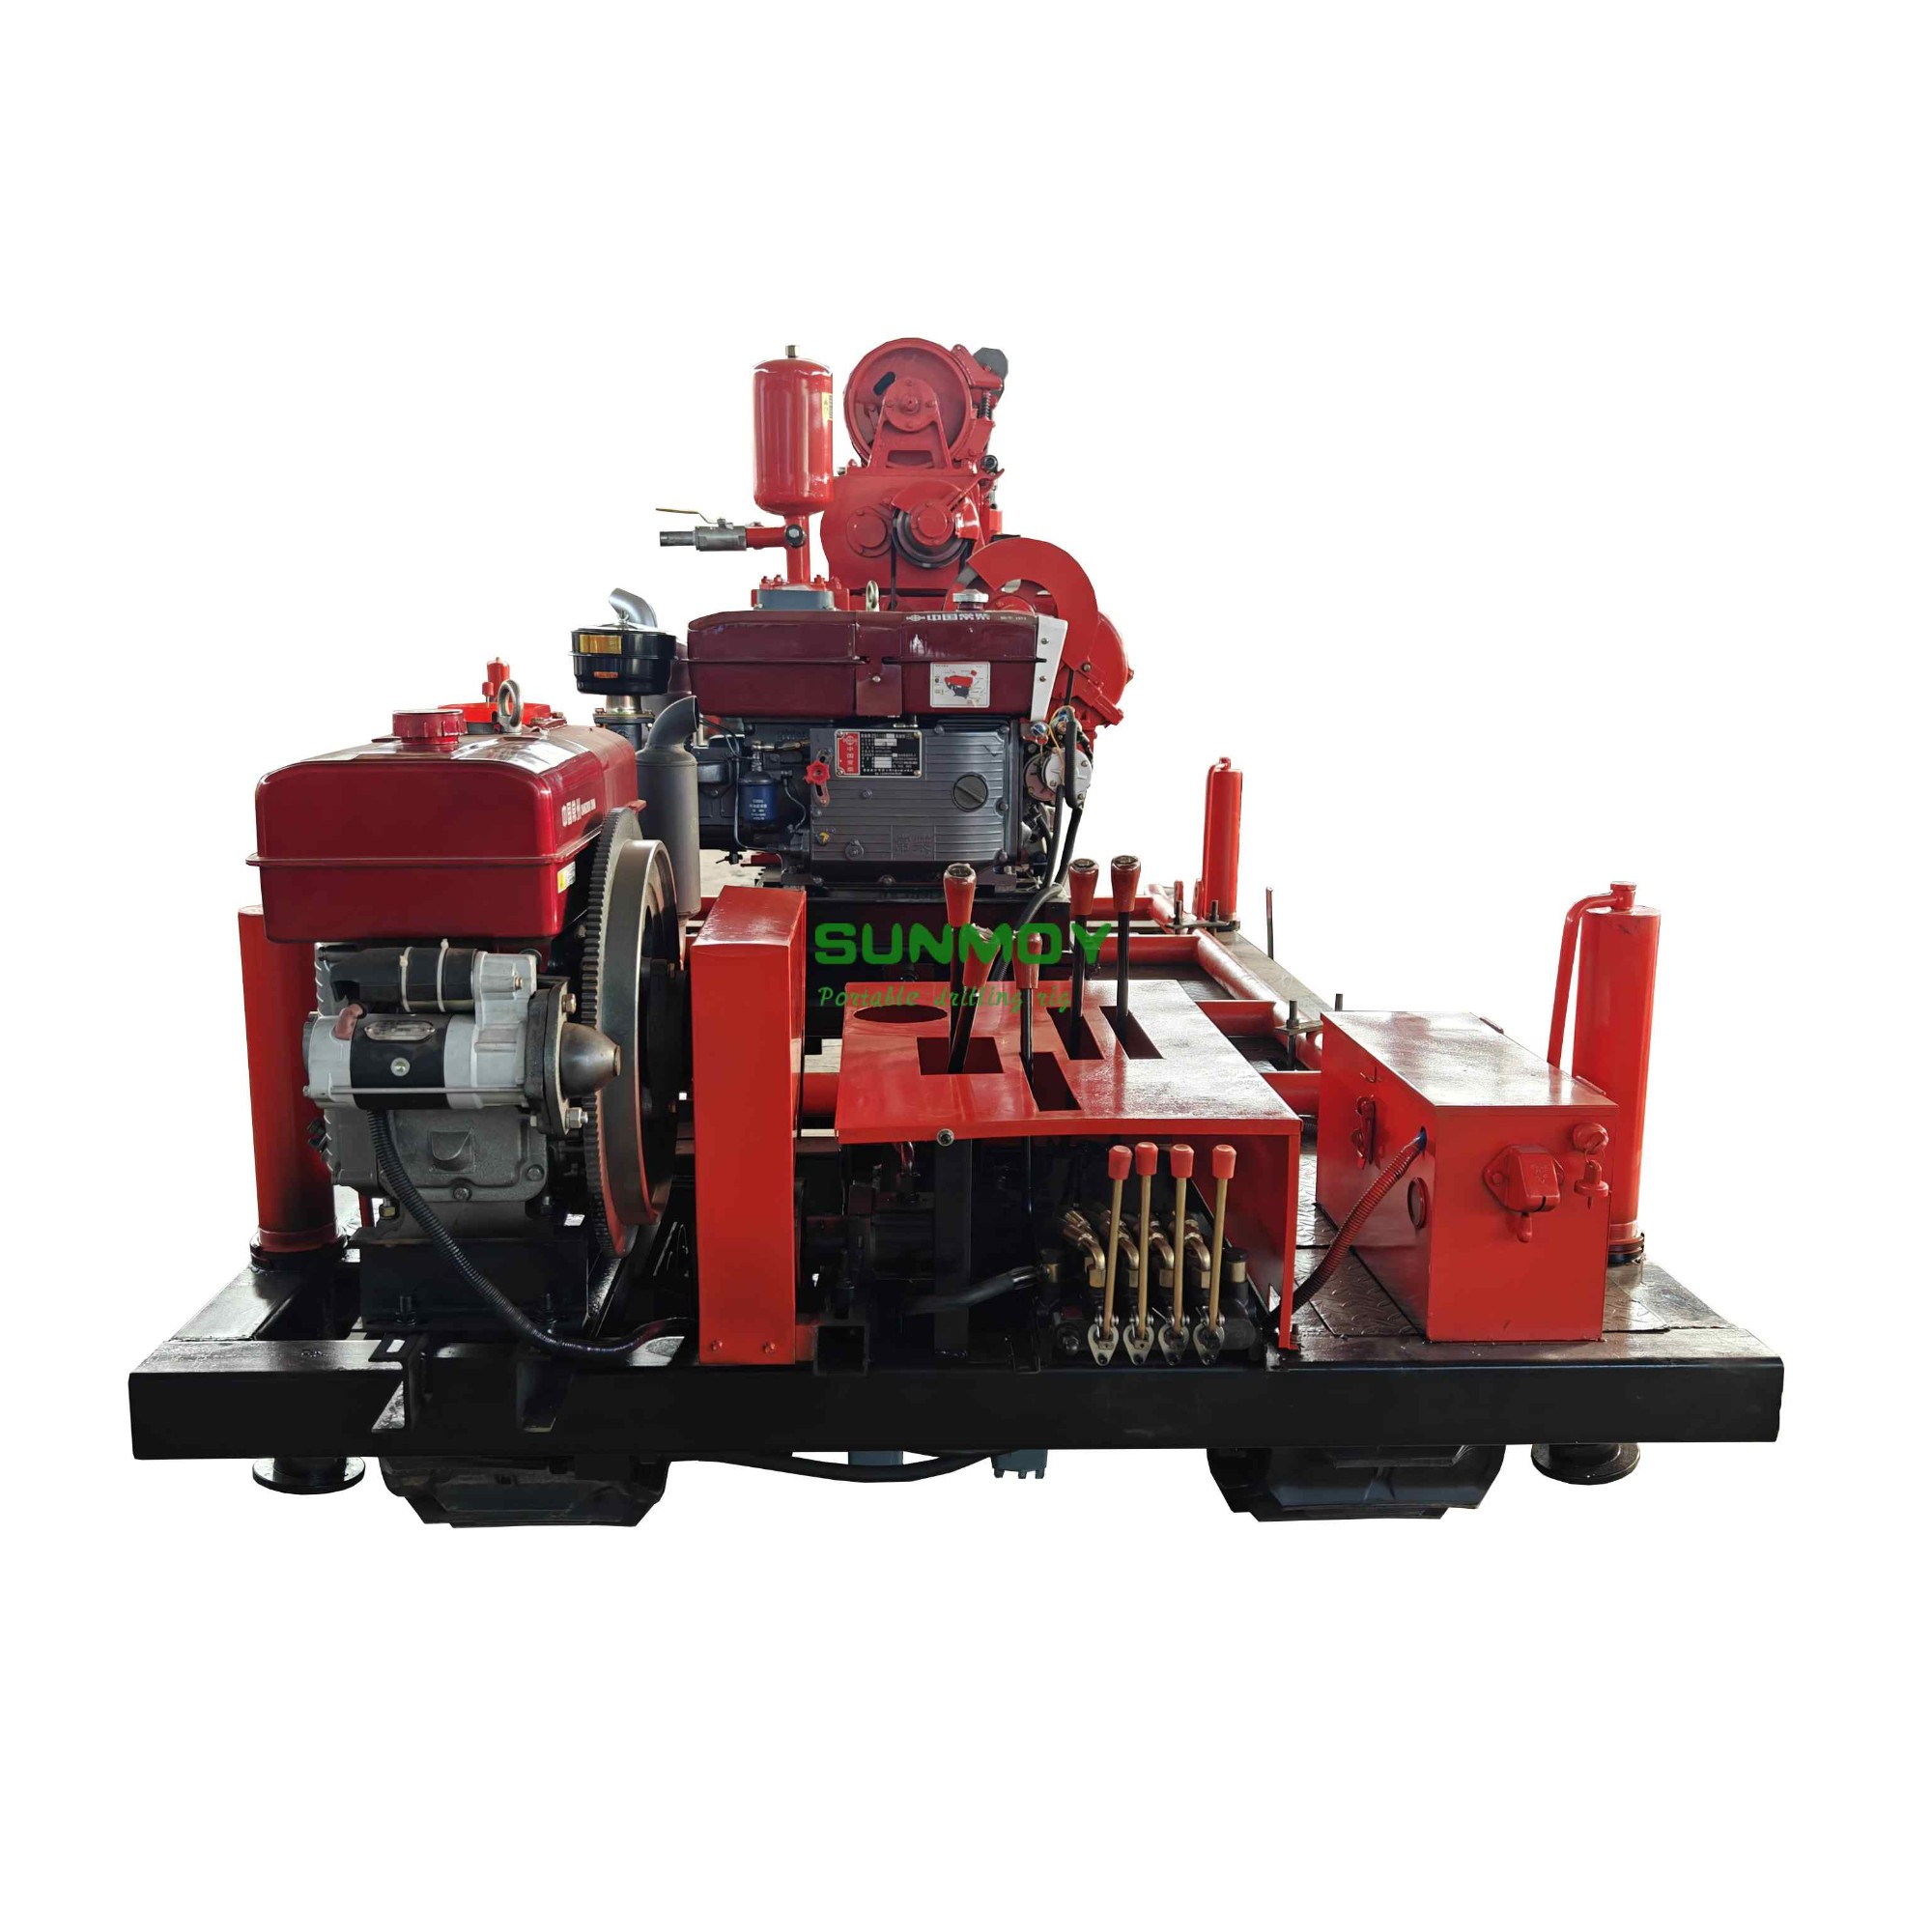 HG300D-200 Crawler mounted drilling rig